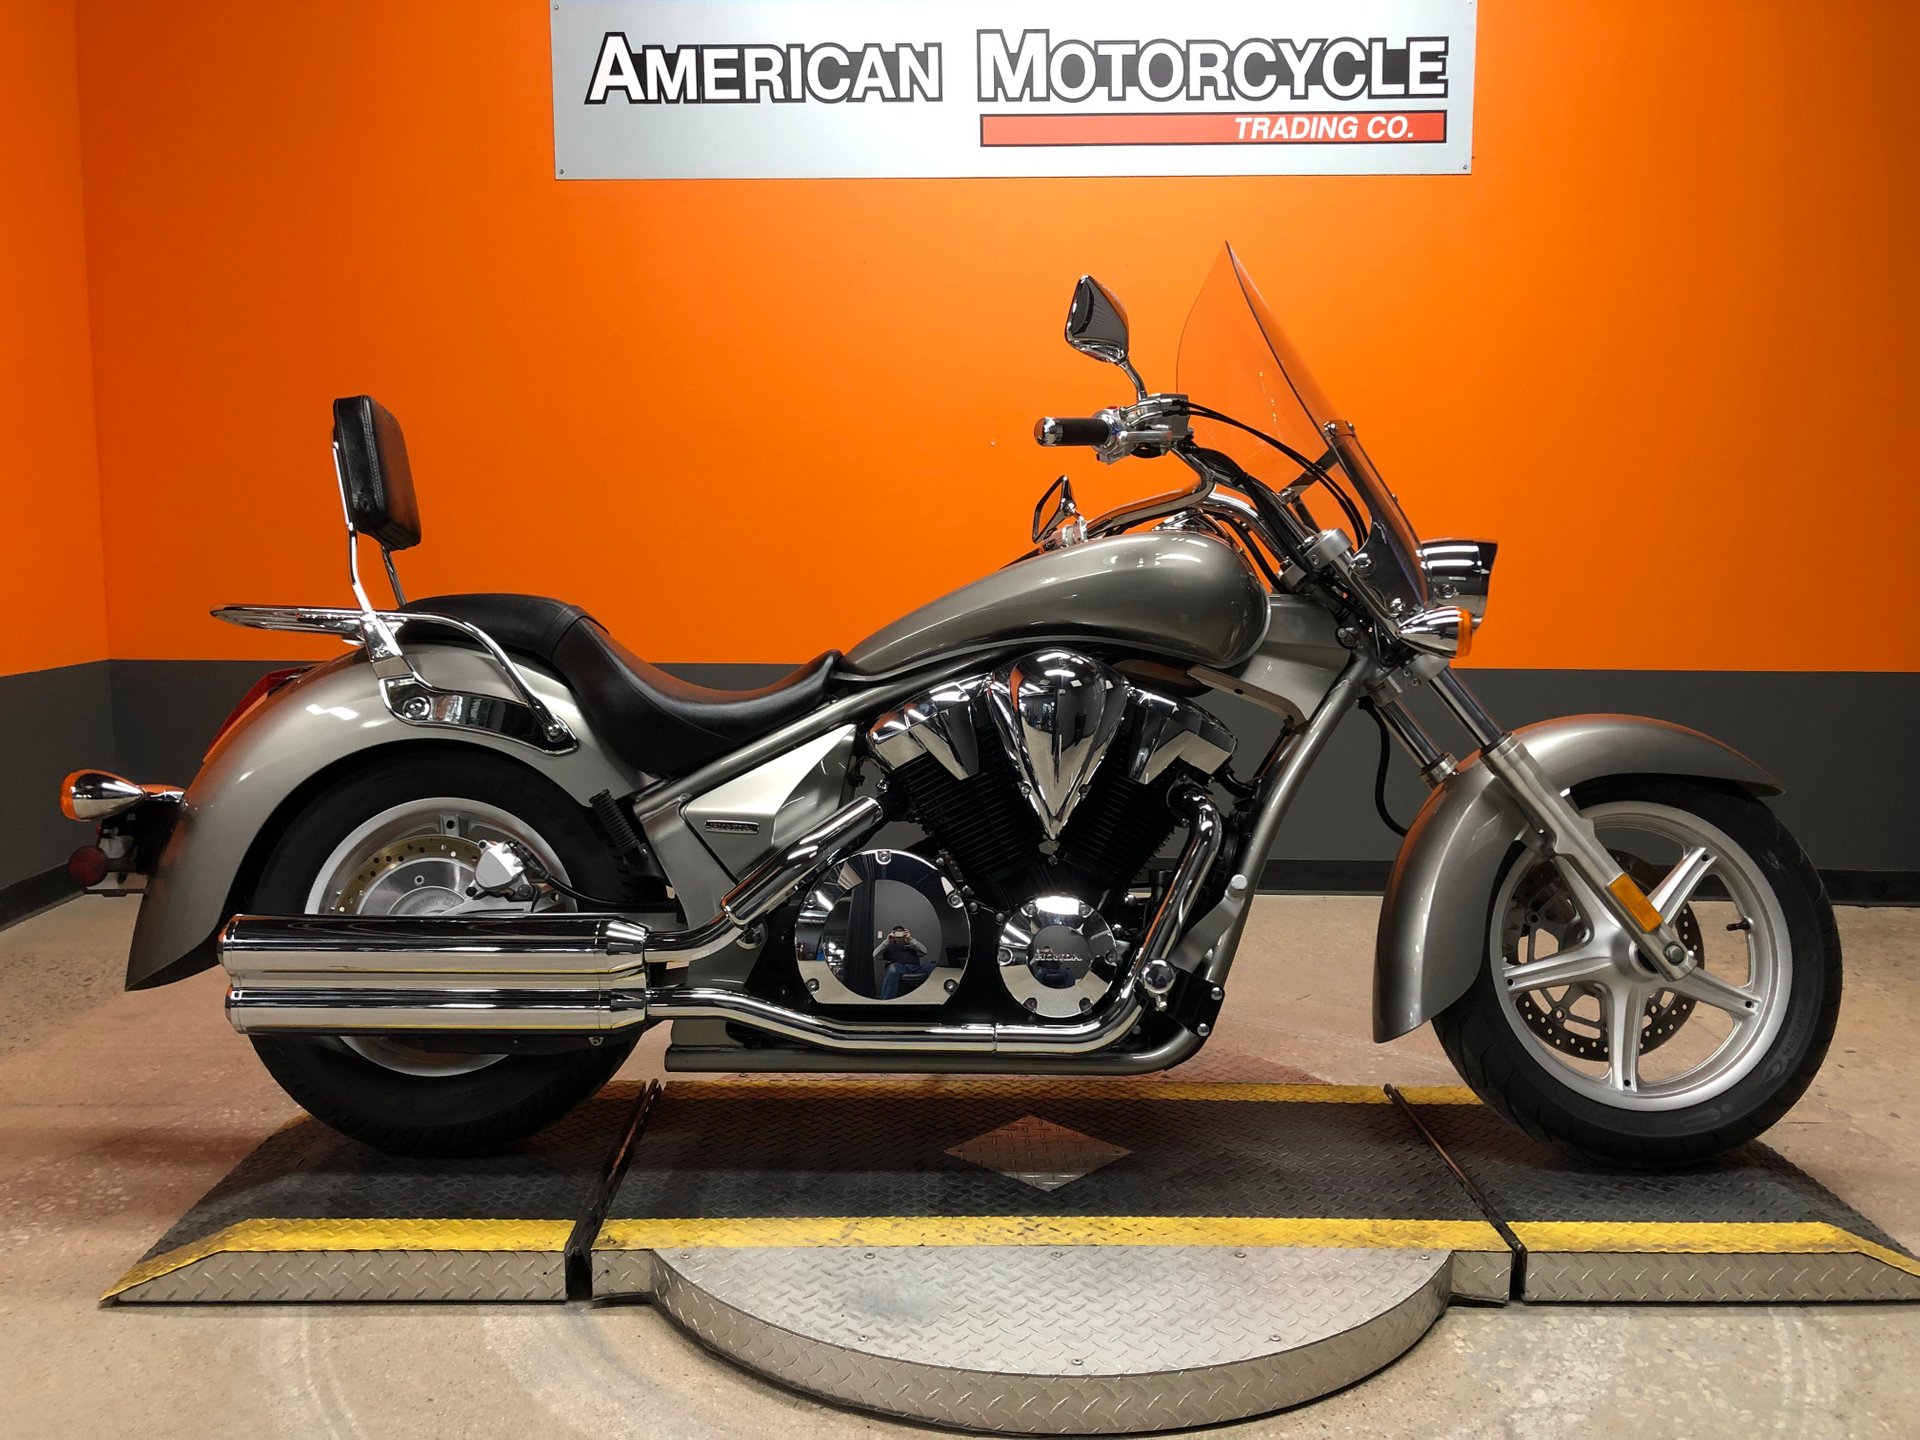 2011 Honda Stateline | American Motorcycle Trading Company - Used ...